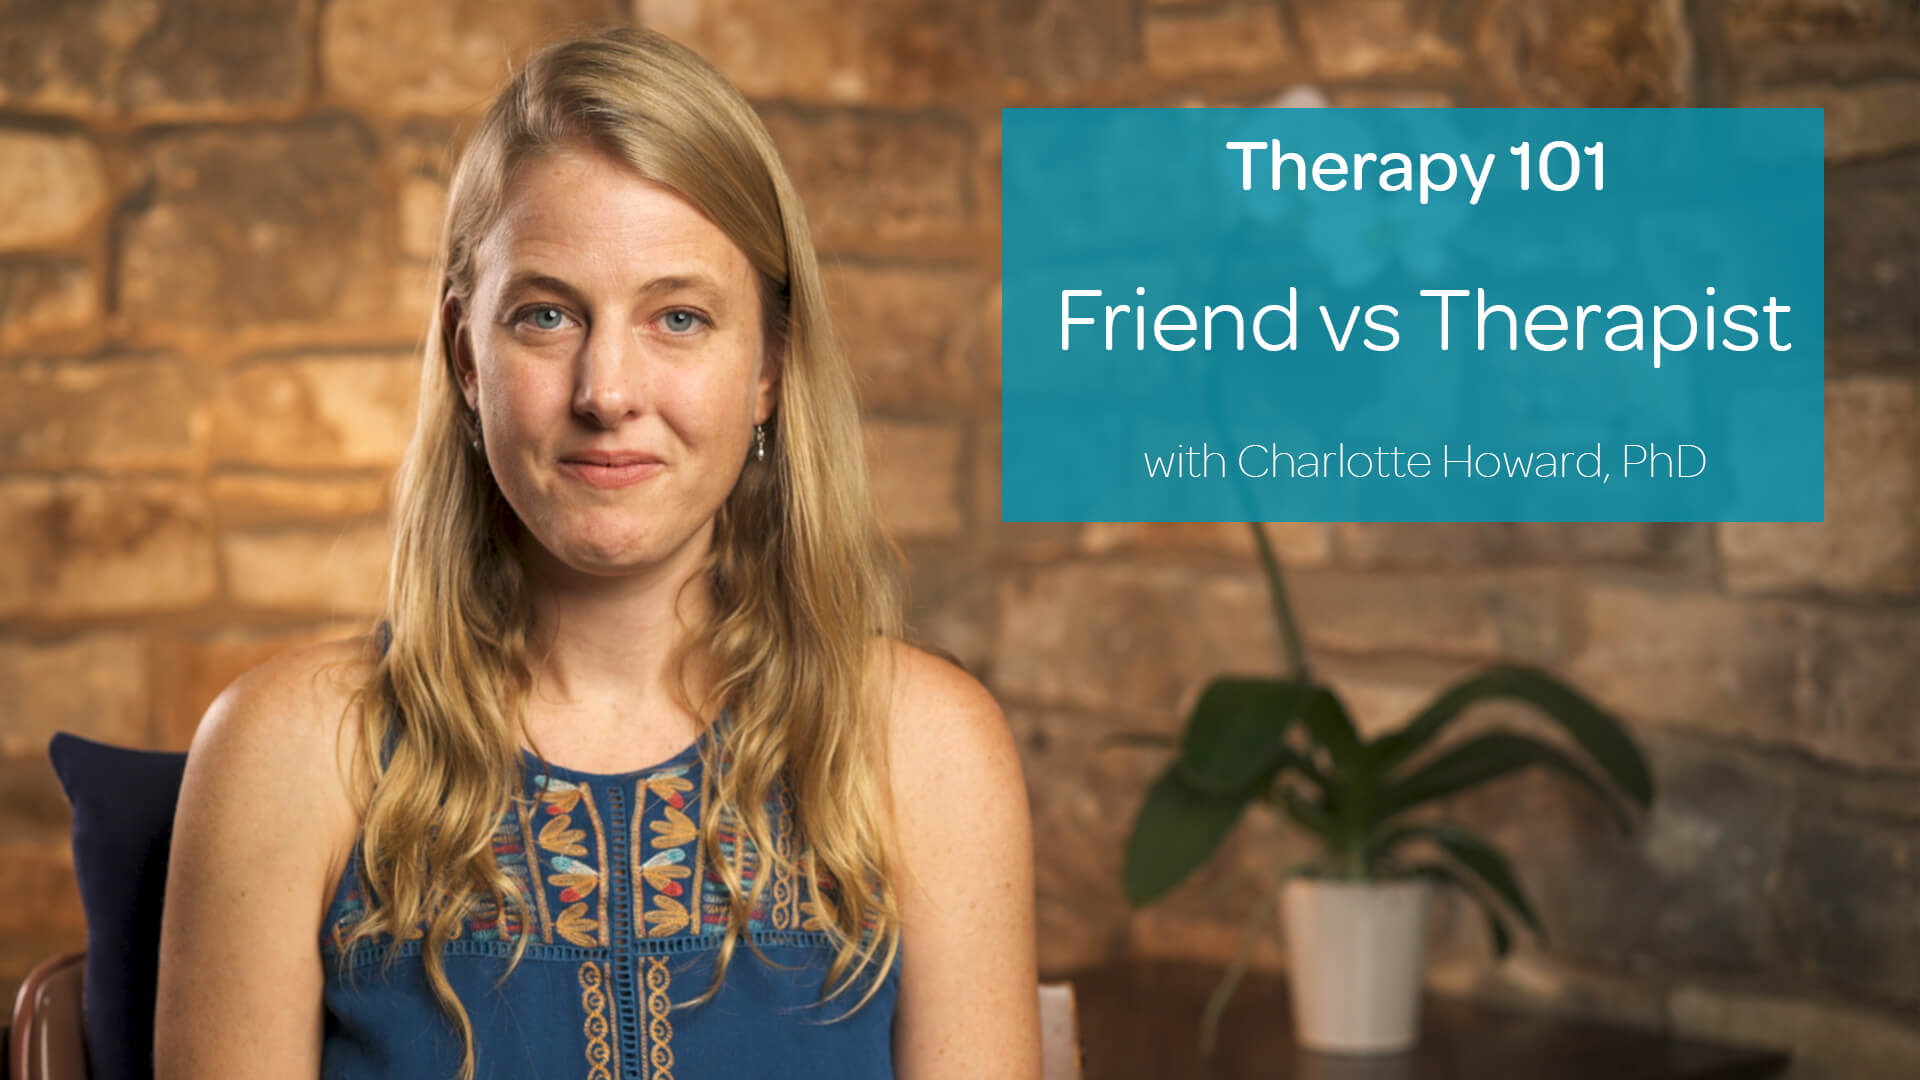 Friend vs Therapist